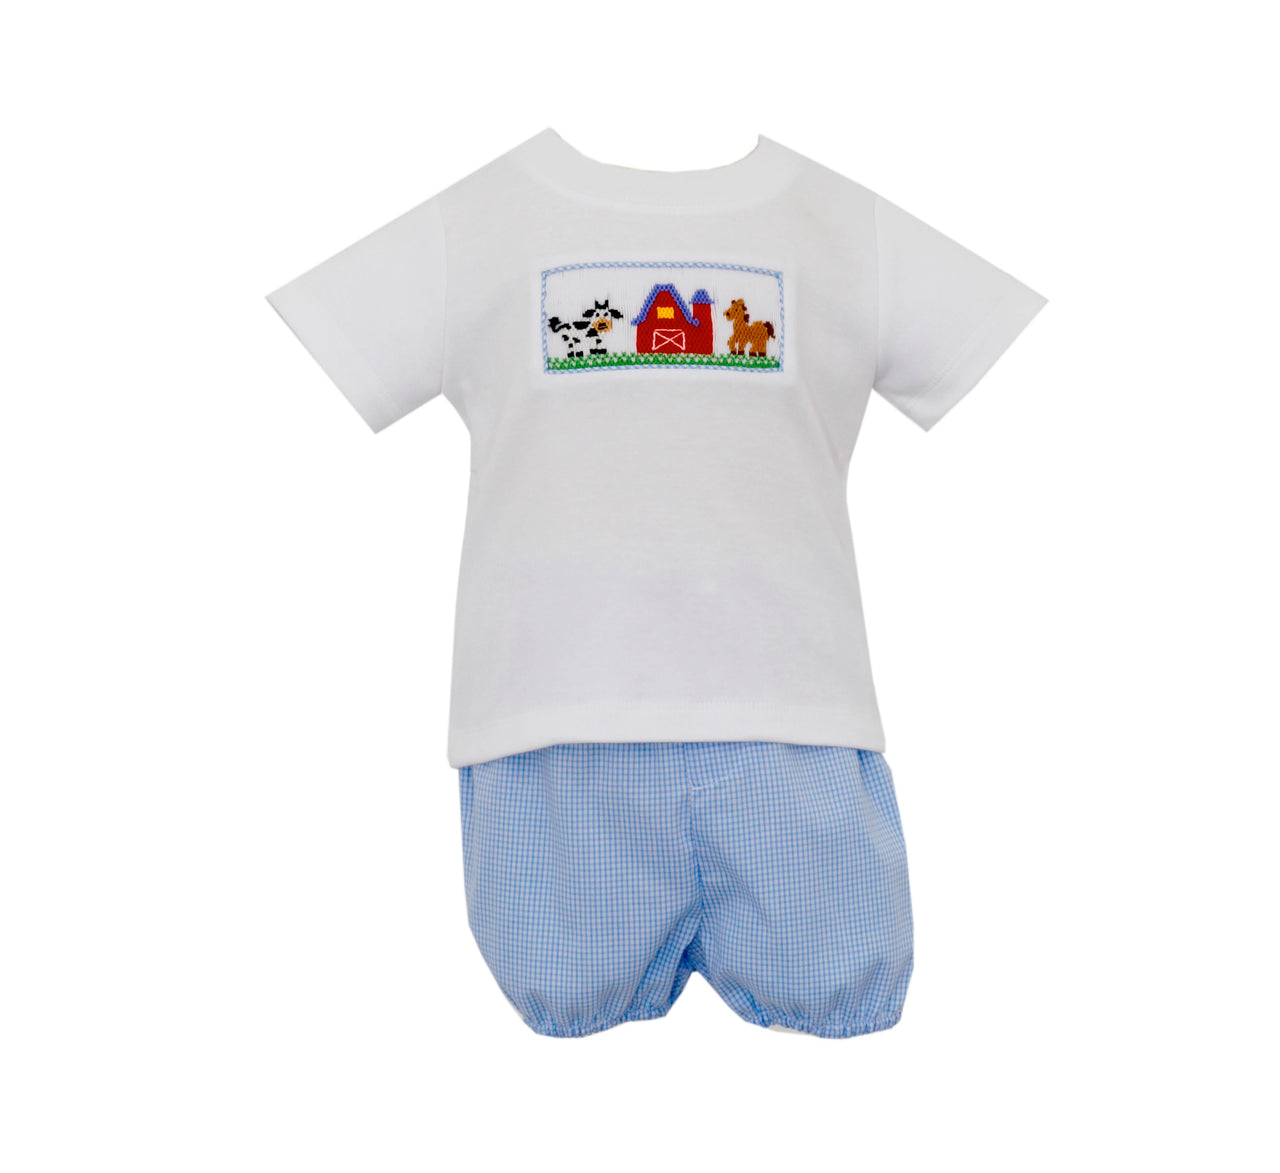 Petit Bebe Farm Boy's Diaper Set S/S White T-shirt W/Lt Blue Check Diaper 115M-MF23 5006